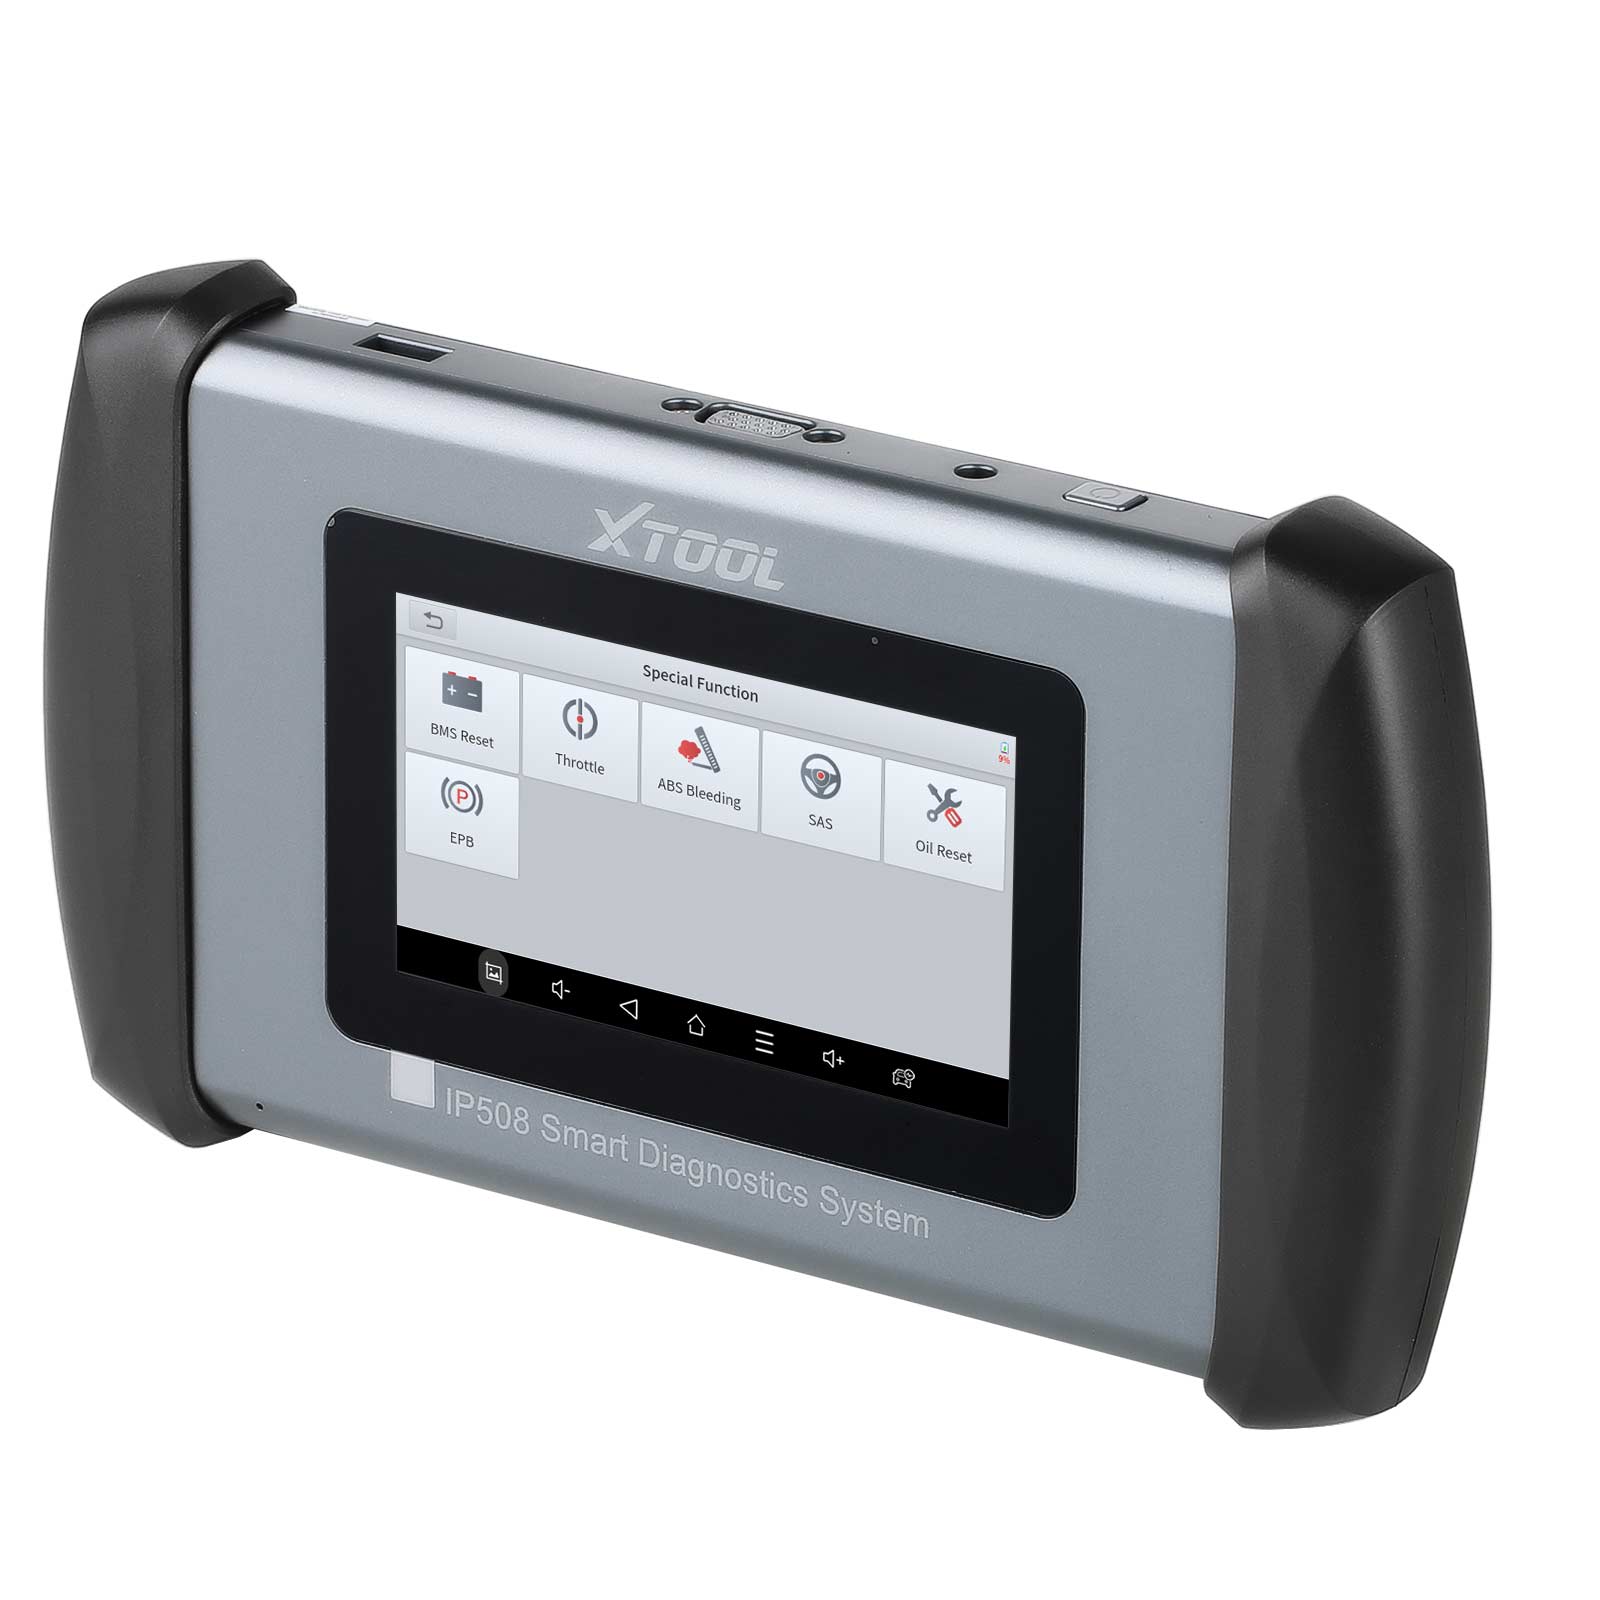 XTOOL InPlus IP508 OBD2 System Diagnostic Tools ABS SRS Scanner de